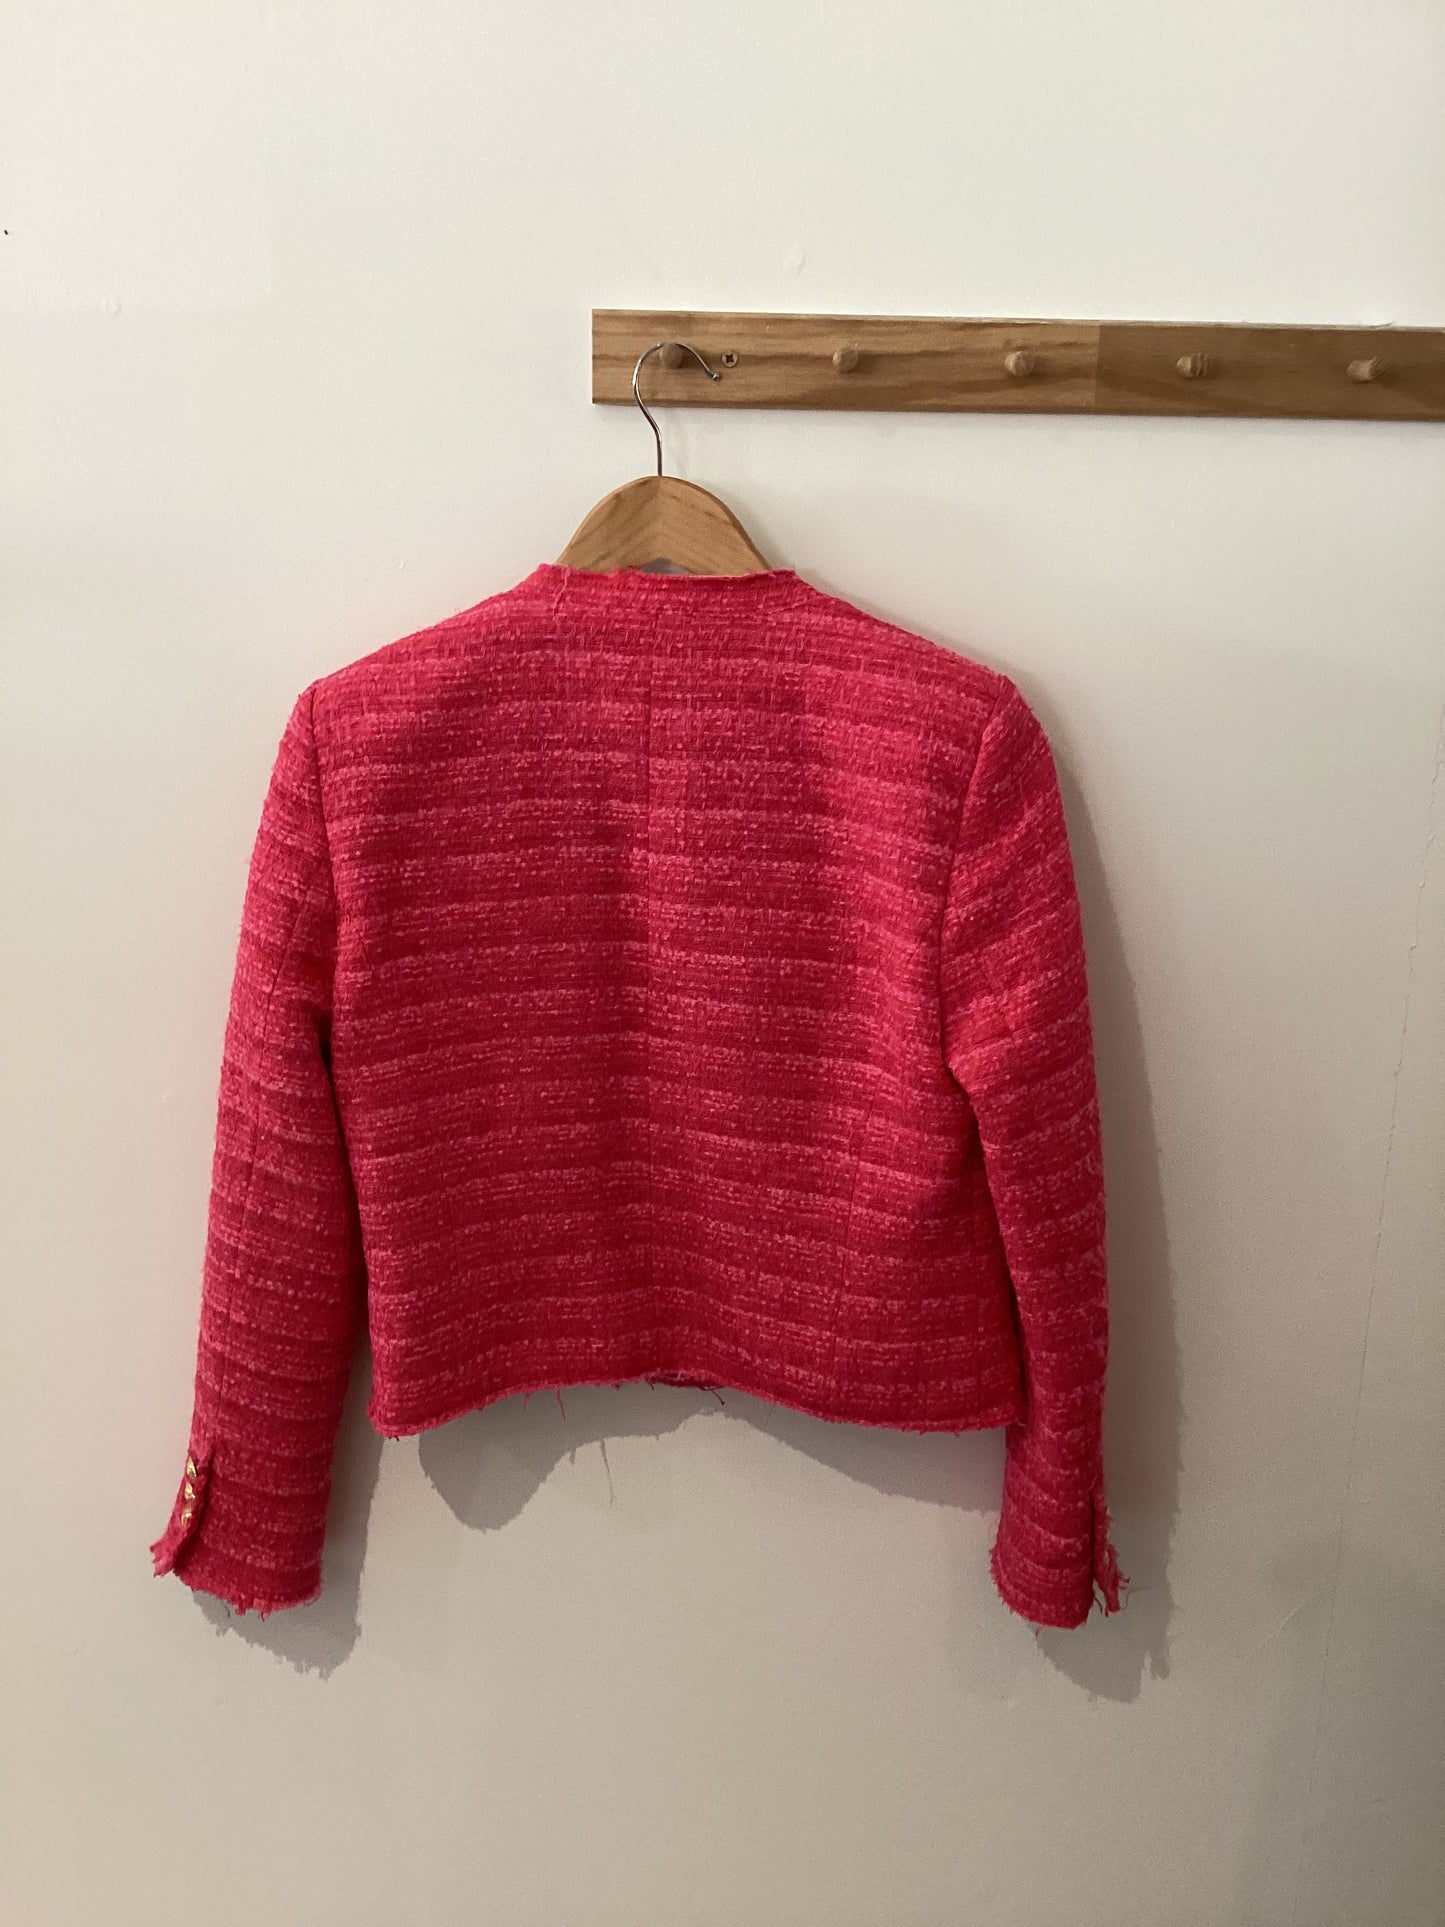 Zara Women's Pink Jacket